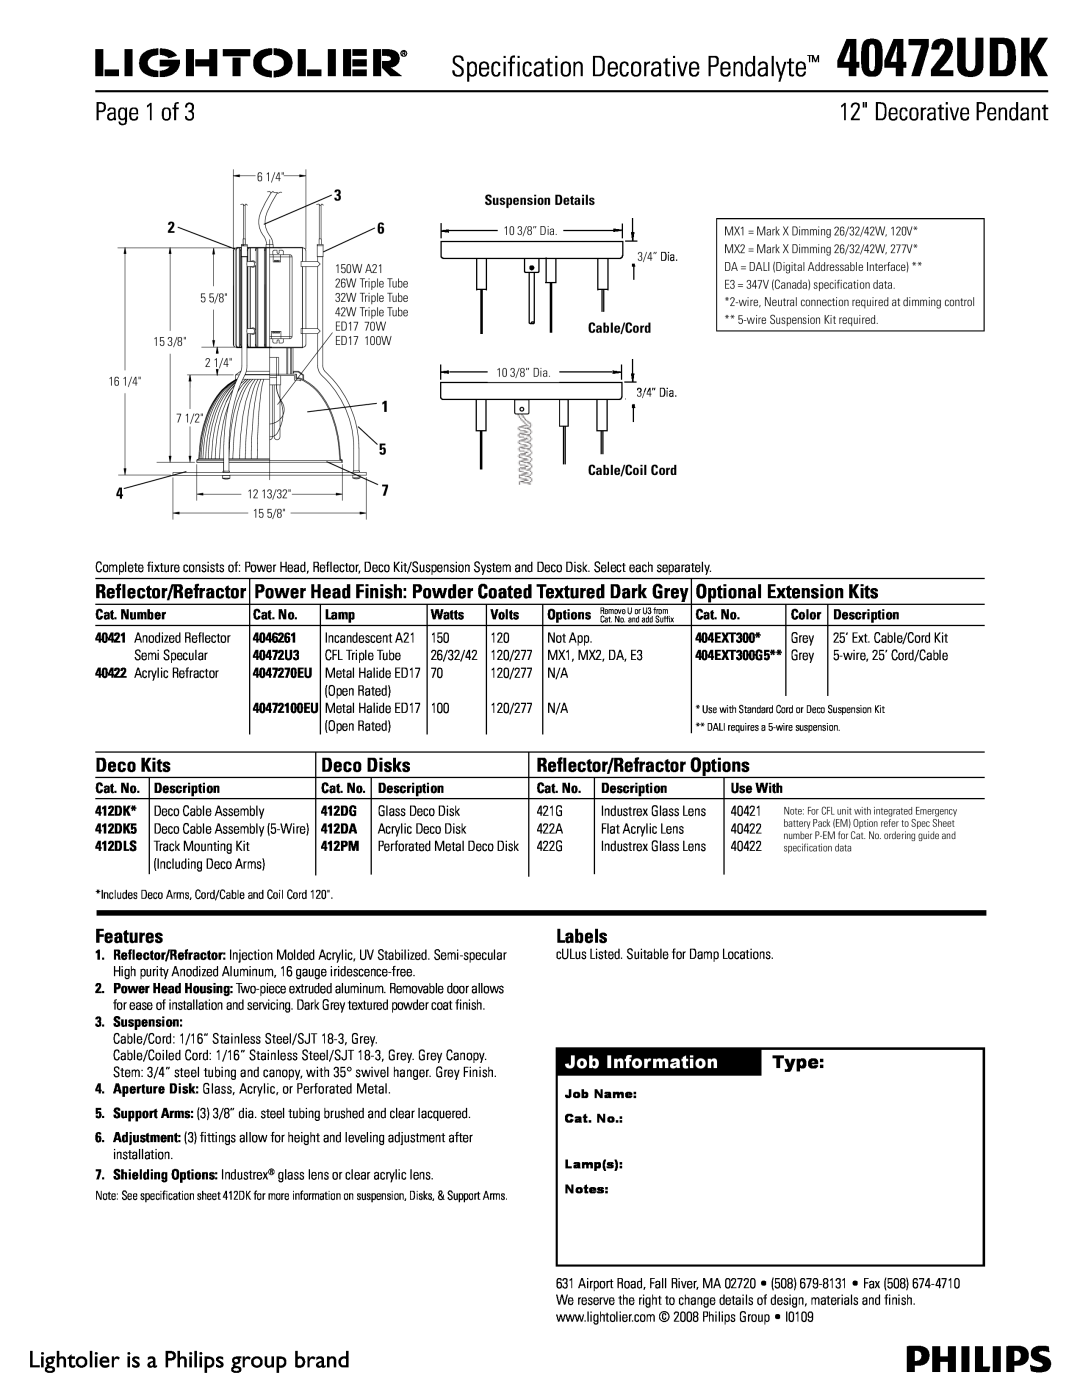 Lightolier specifications Decorative Pendant, Specification Decorative Pendalyte 40472UDK, Page 1 of, Deco Kits, Labels 